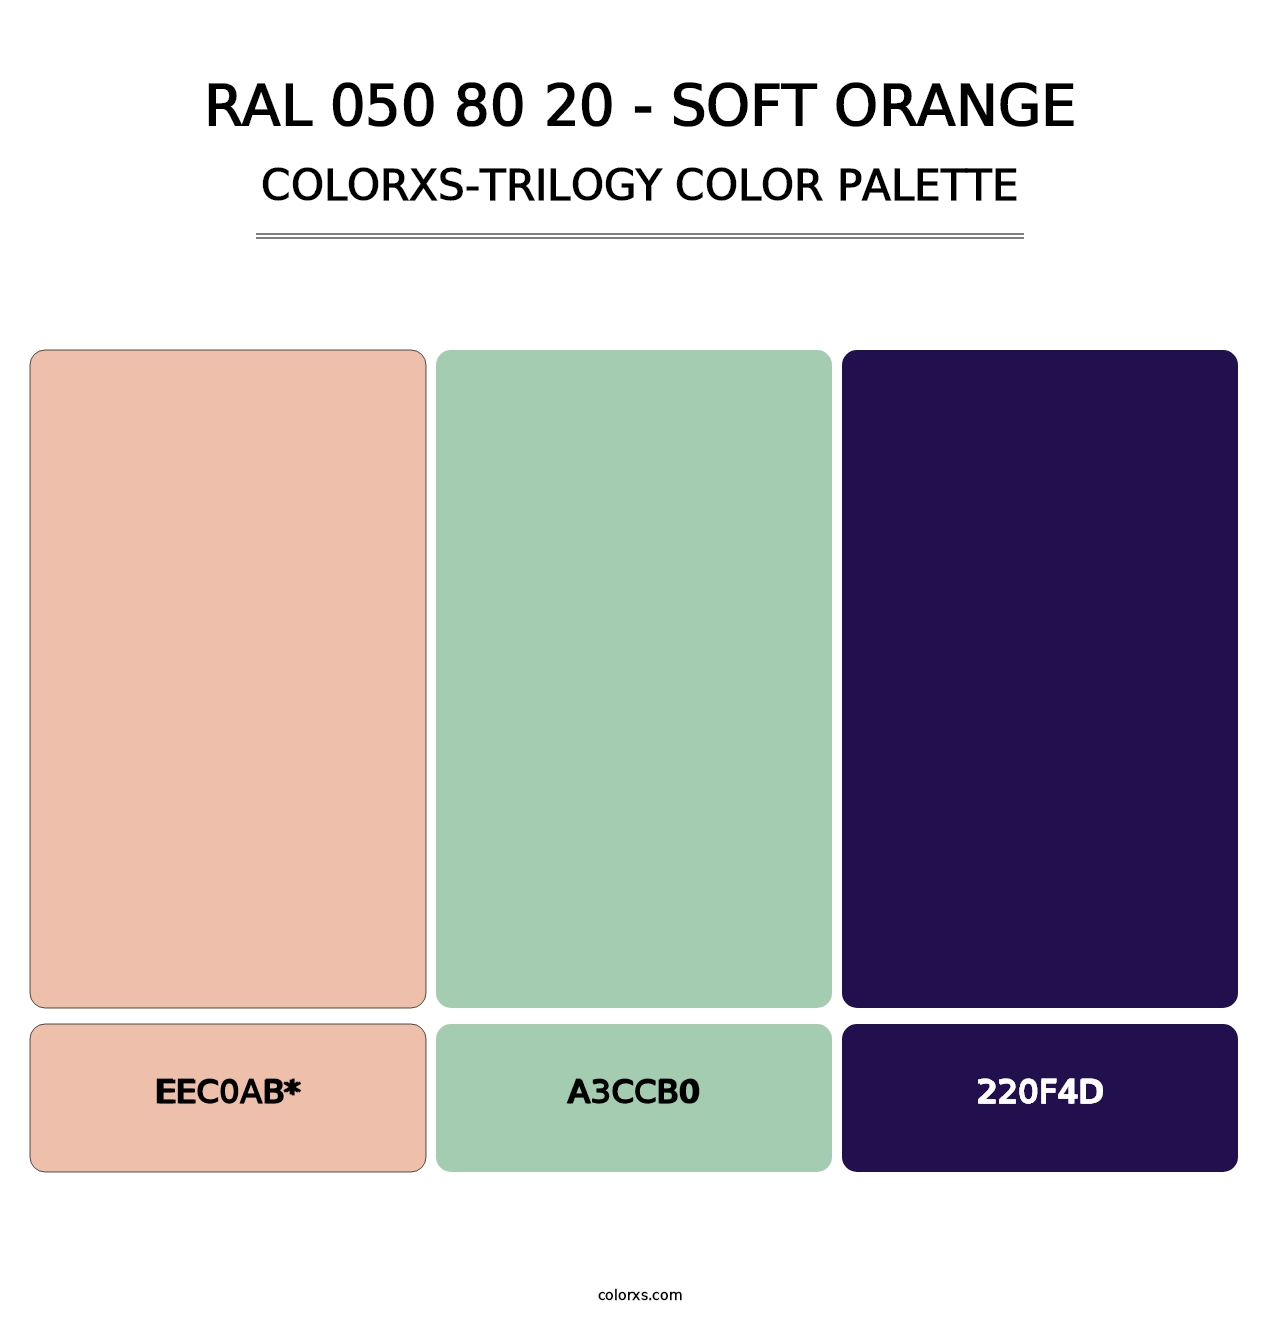 RAL 050 80 20 - Soft Orange - Colorxs Trilogy Palette